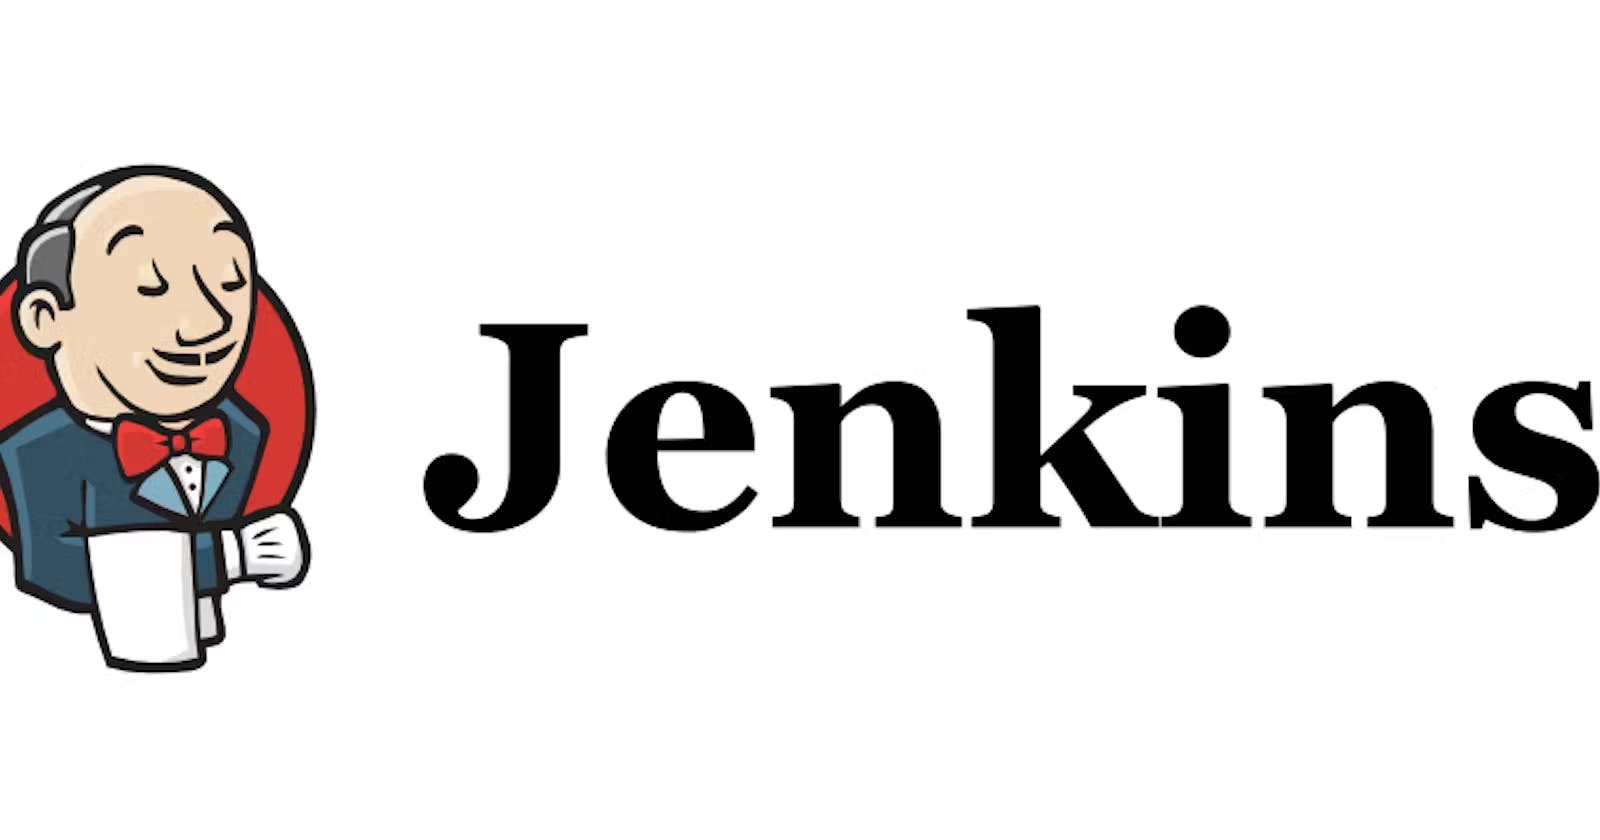 Automating CI/CD with Jenkins: A Dockerized Approach